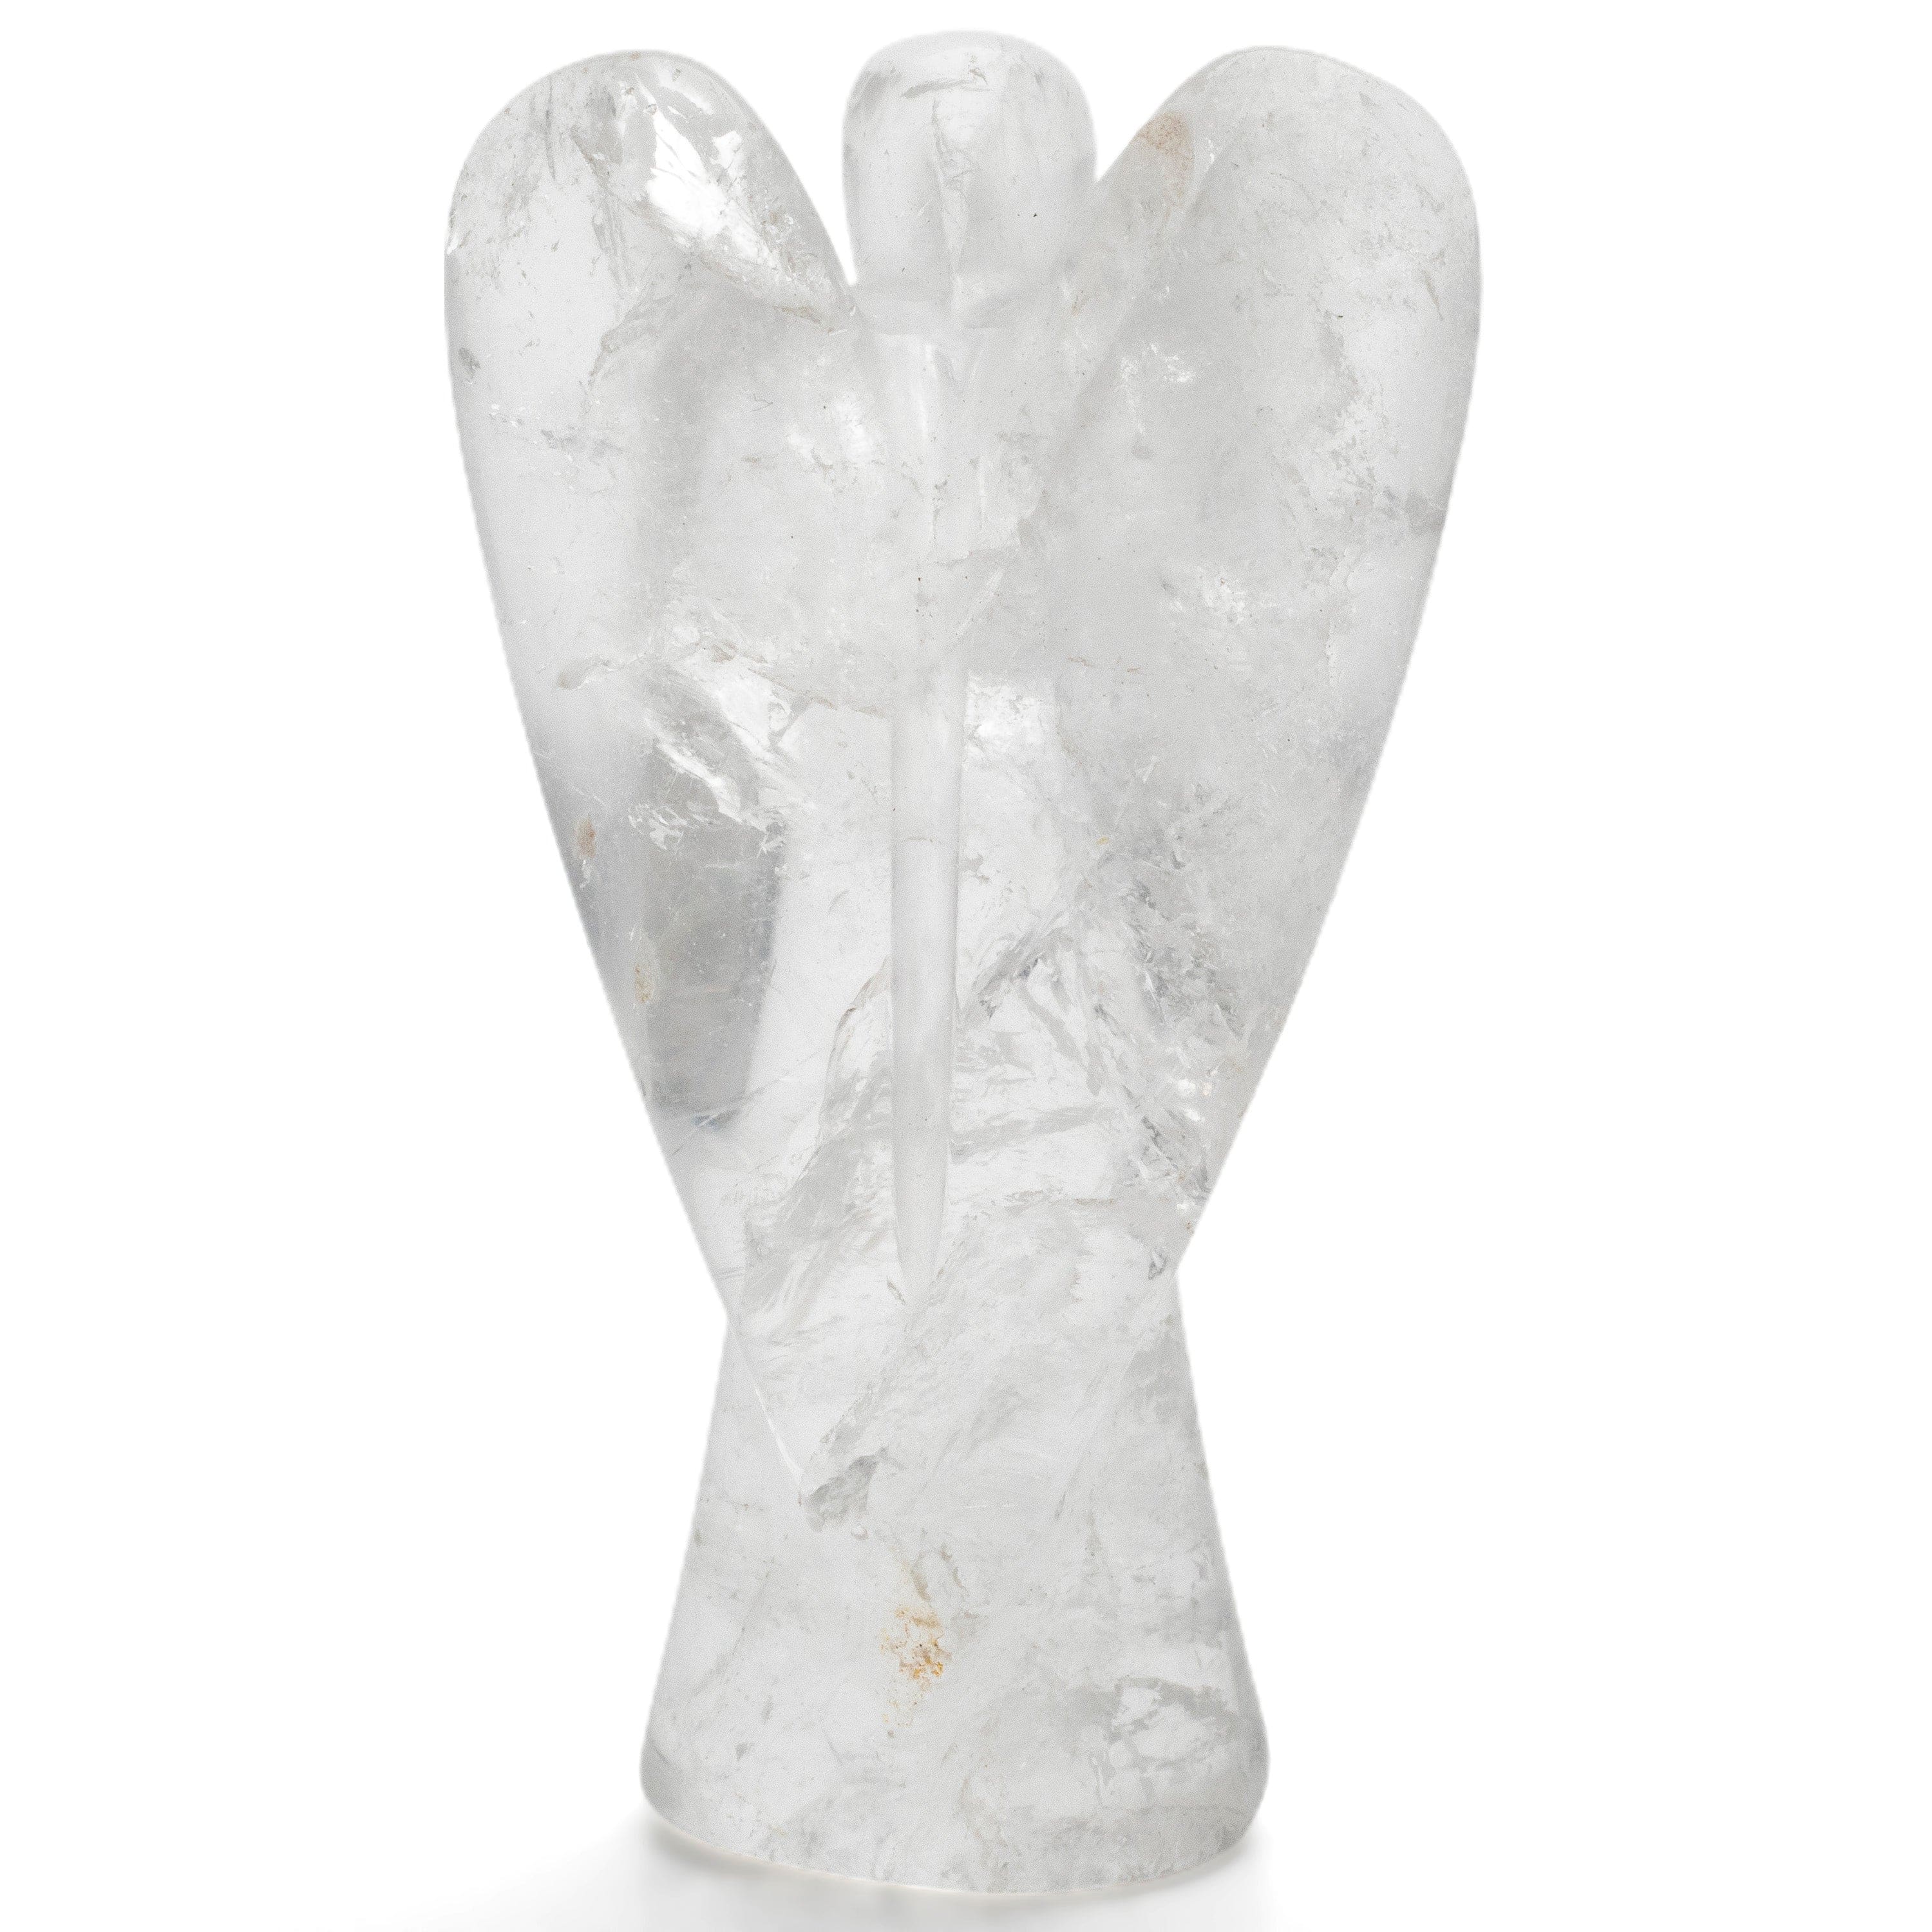 Kalifano Gemstone Carvings Natural Brazilian Quartz Angel Carving - 3.5" / 160g QZA-320